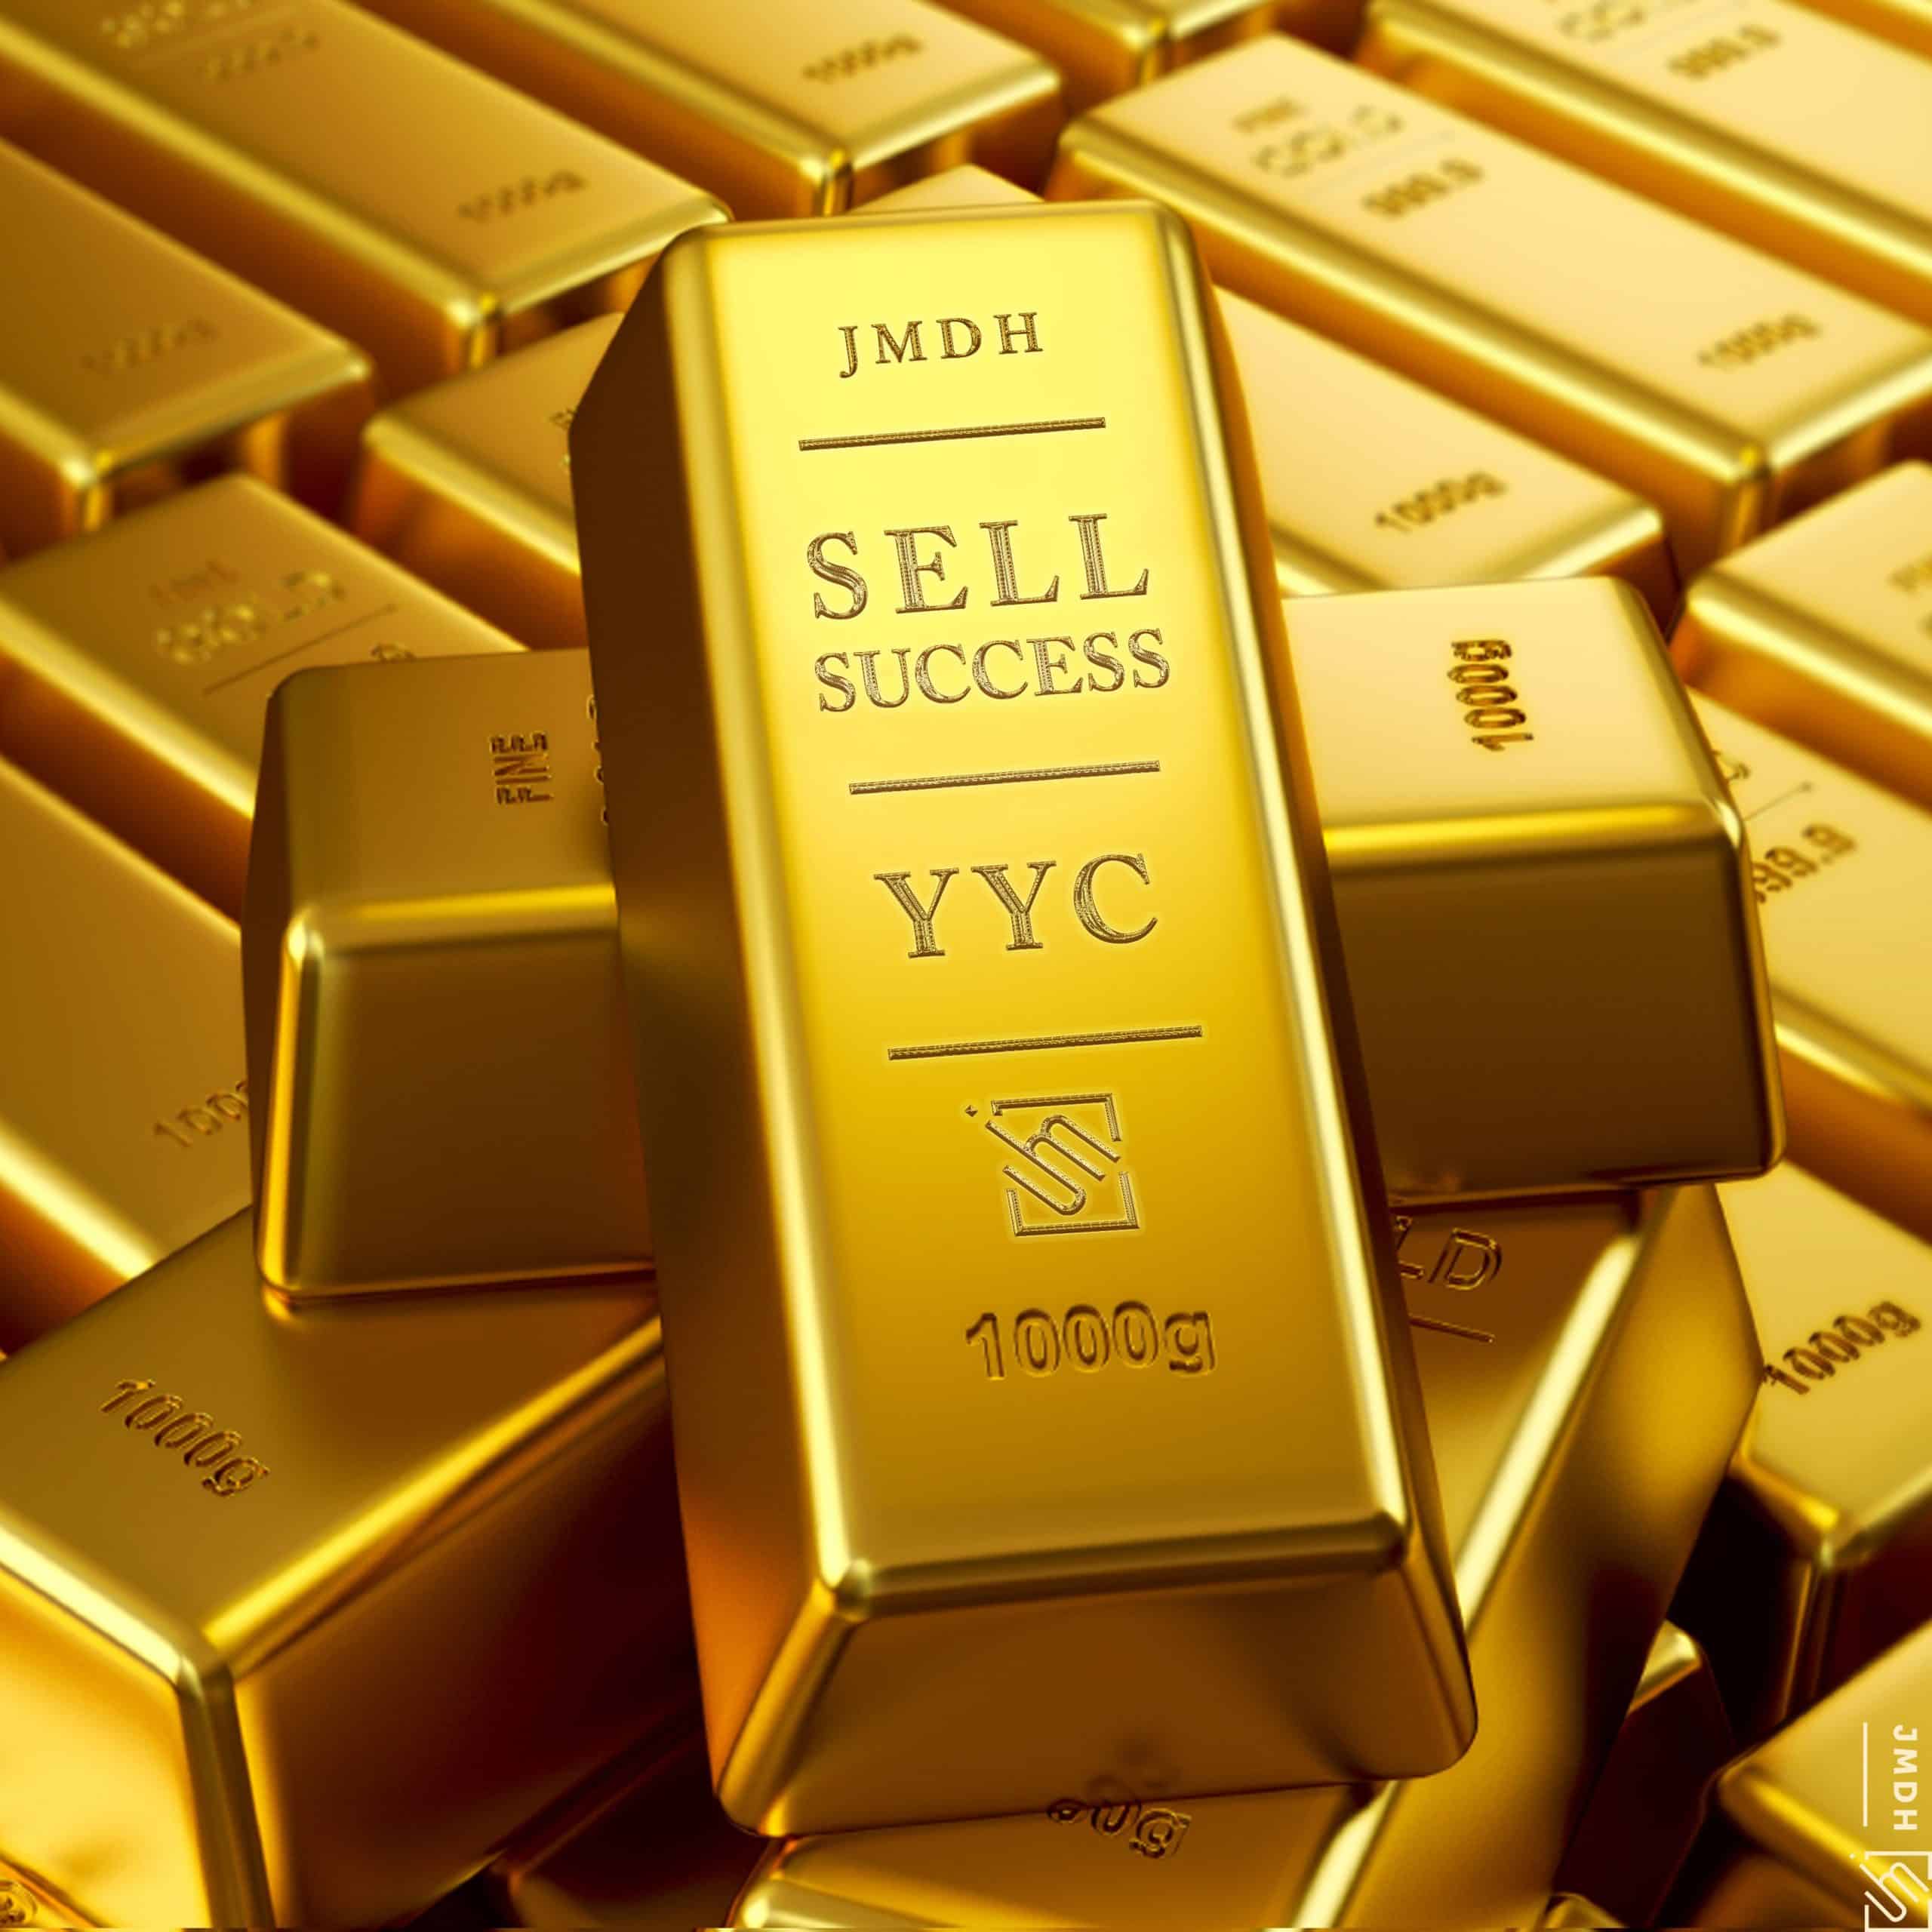 Gold Bars, Selling Success, JMDH